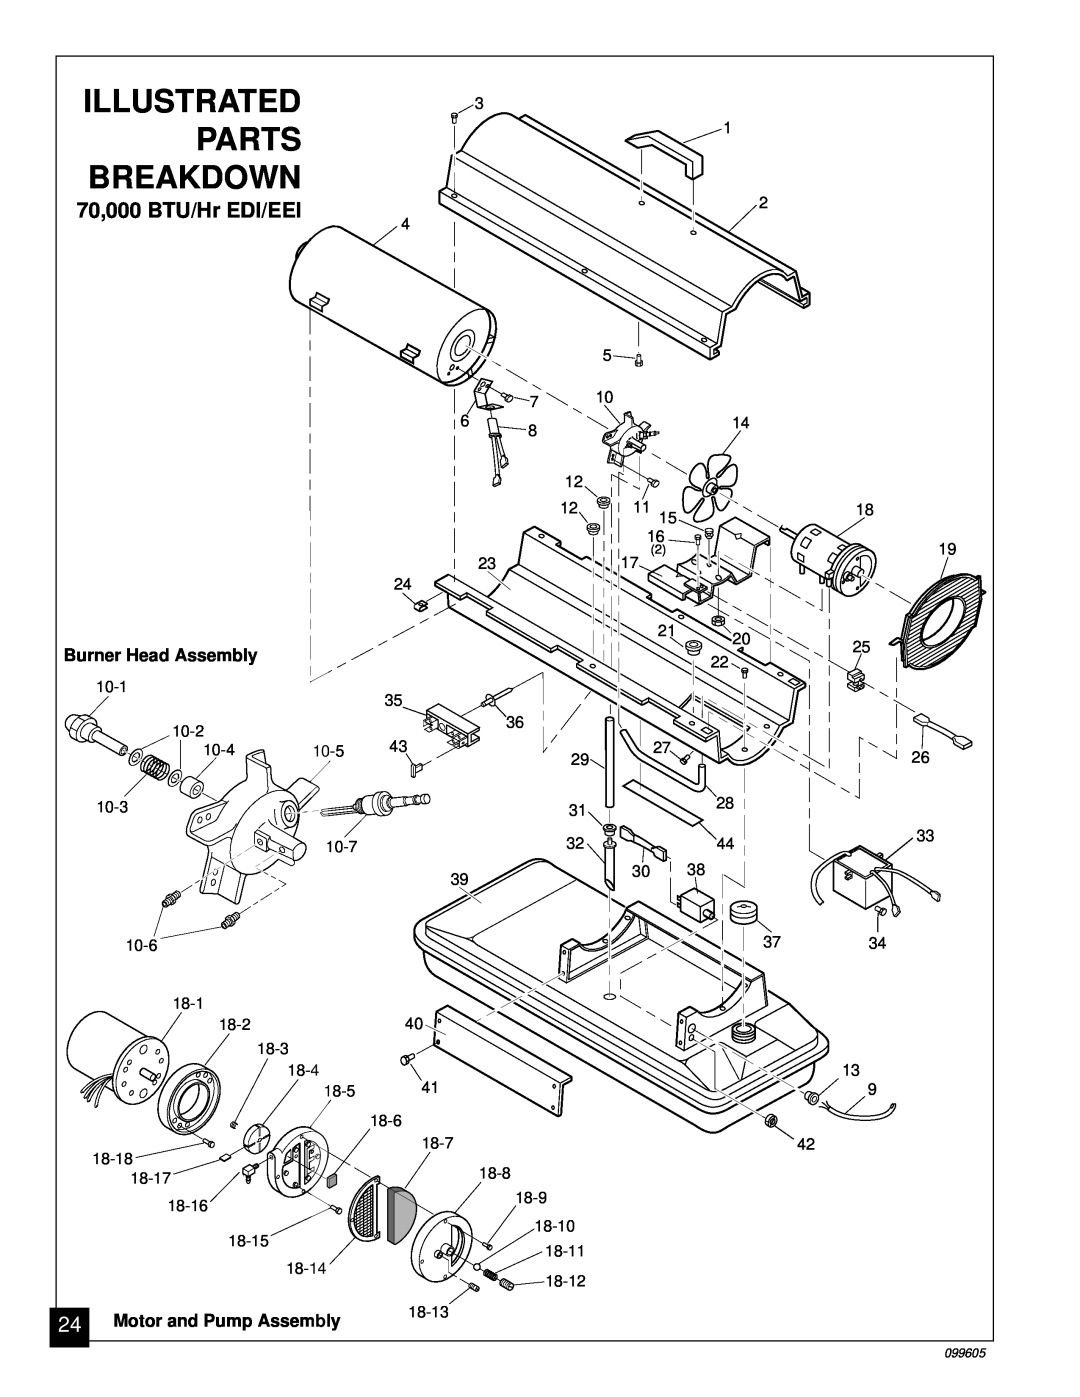 Desa H.S.I. Series 70,000 BTU/Hr EDI/EEI, Parts, Breakdown, Illustrated, Burner Head Assembly, Motor and Pump Assembly 